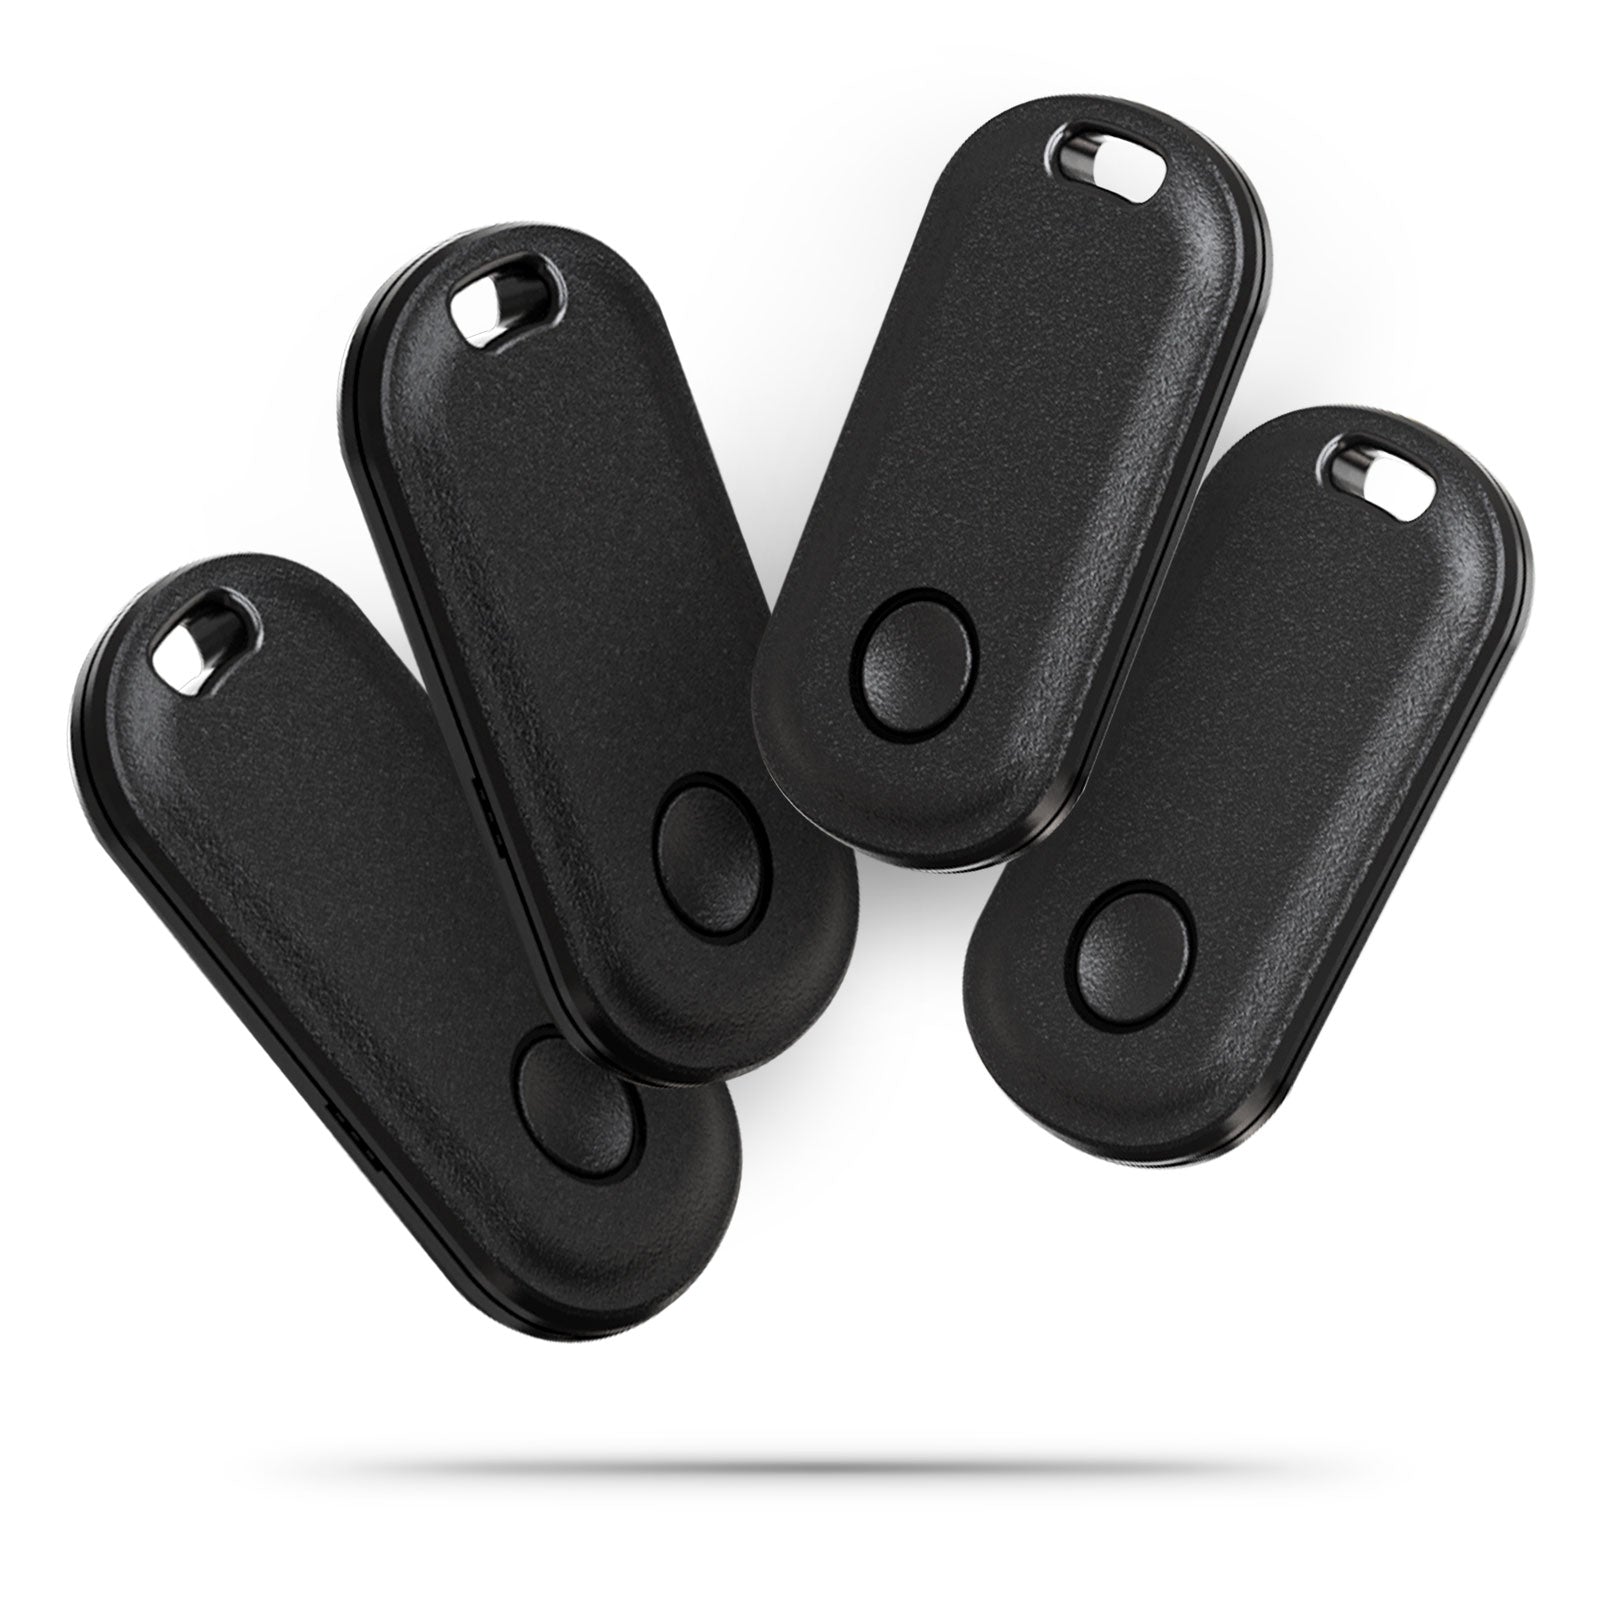 Bluetooth Smart Tracker (2-Pack/ 4-Pack)